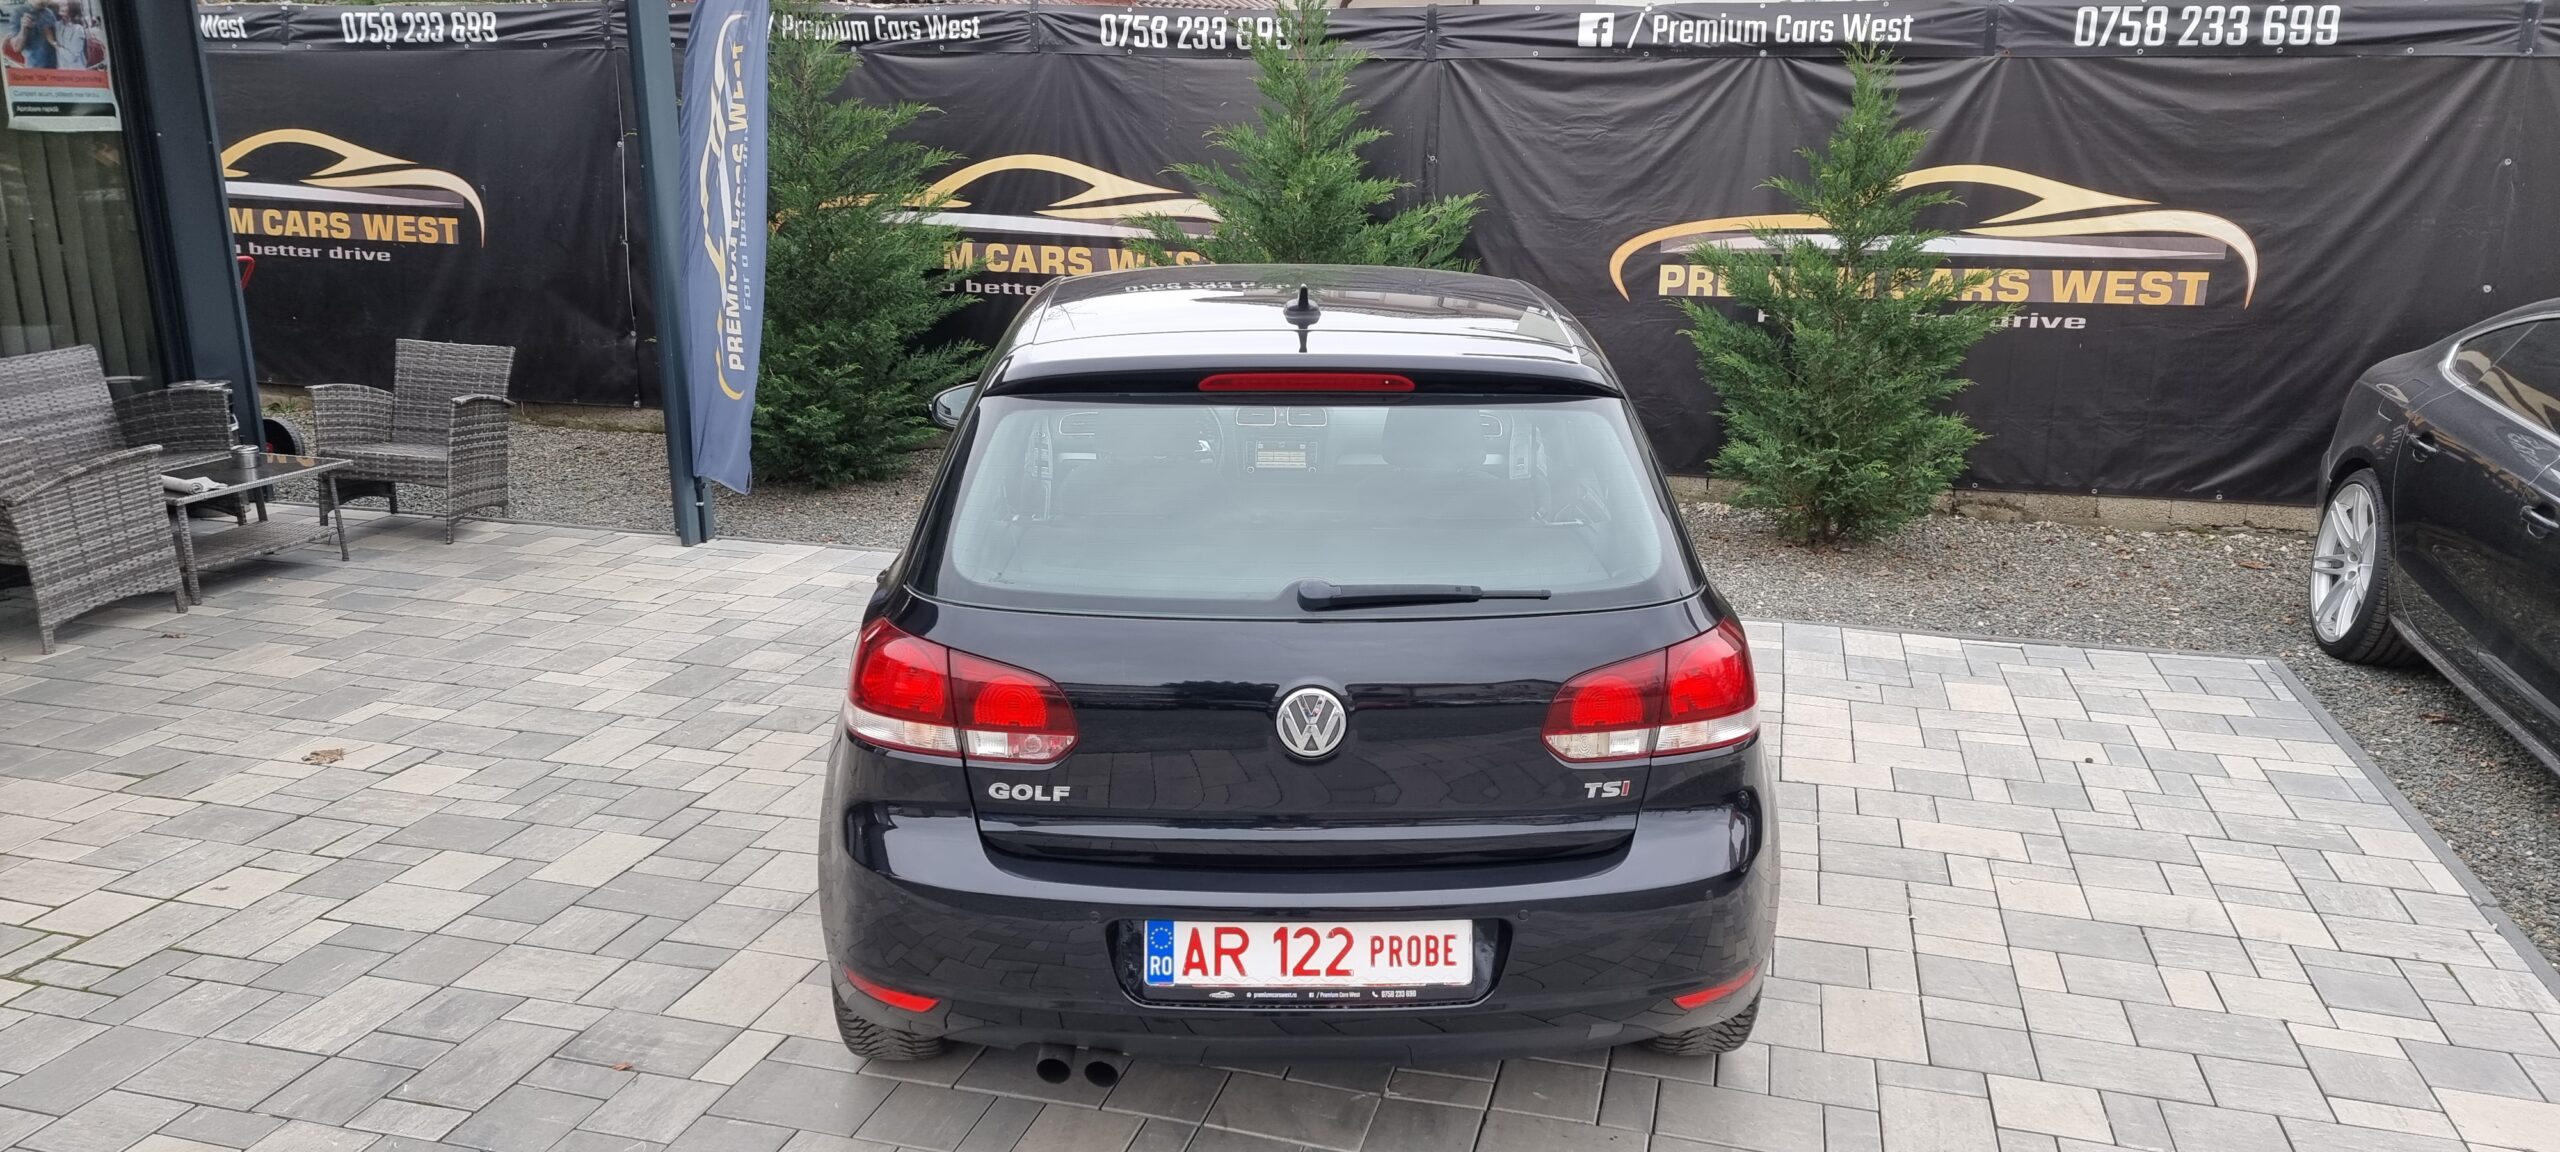 VW GOLF 6 R-LINE,1.4 BENZINA, 122CP, EURO 5, AN 2012